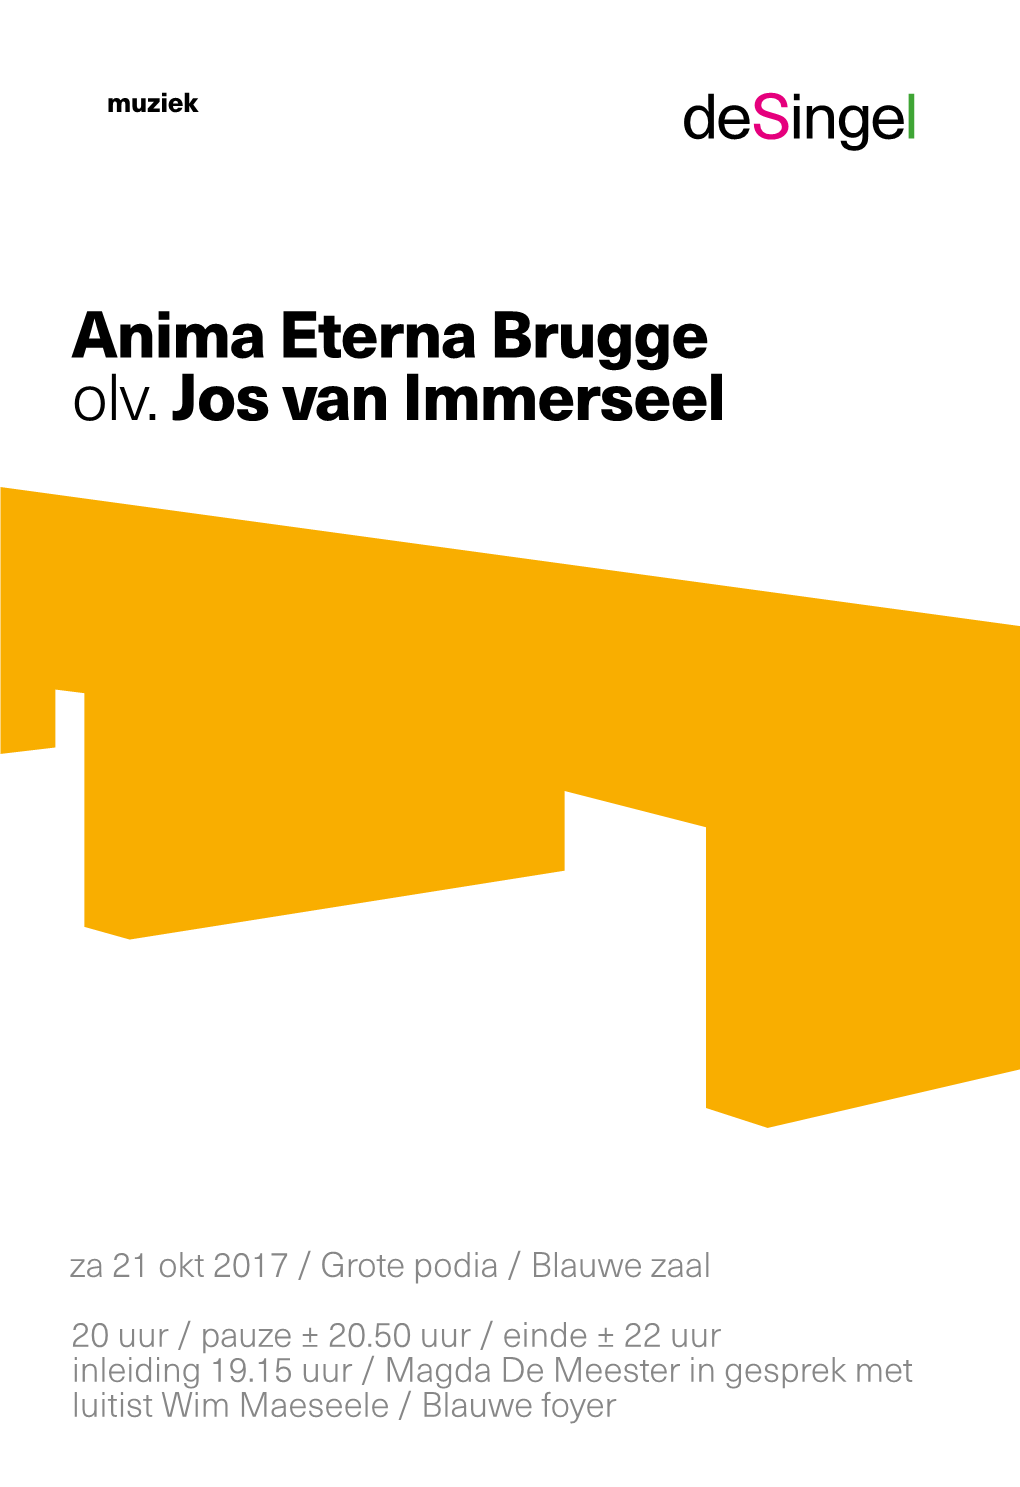 Anima Eterna Brugge Olv